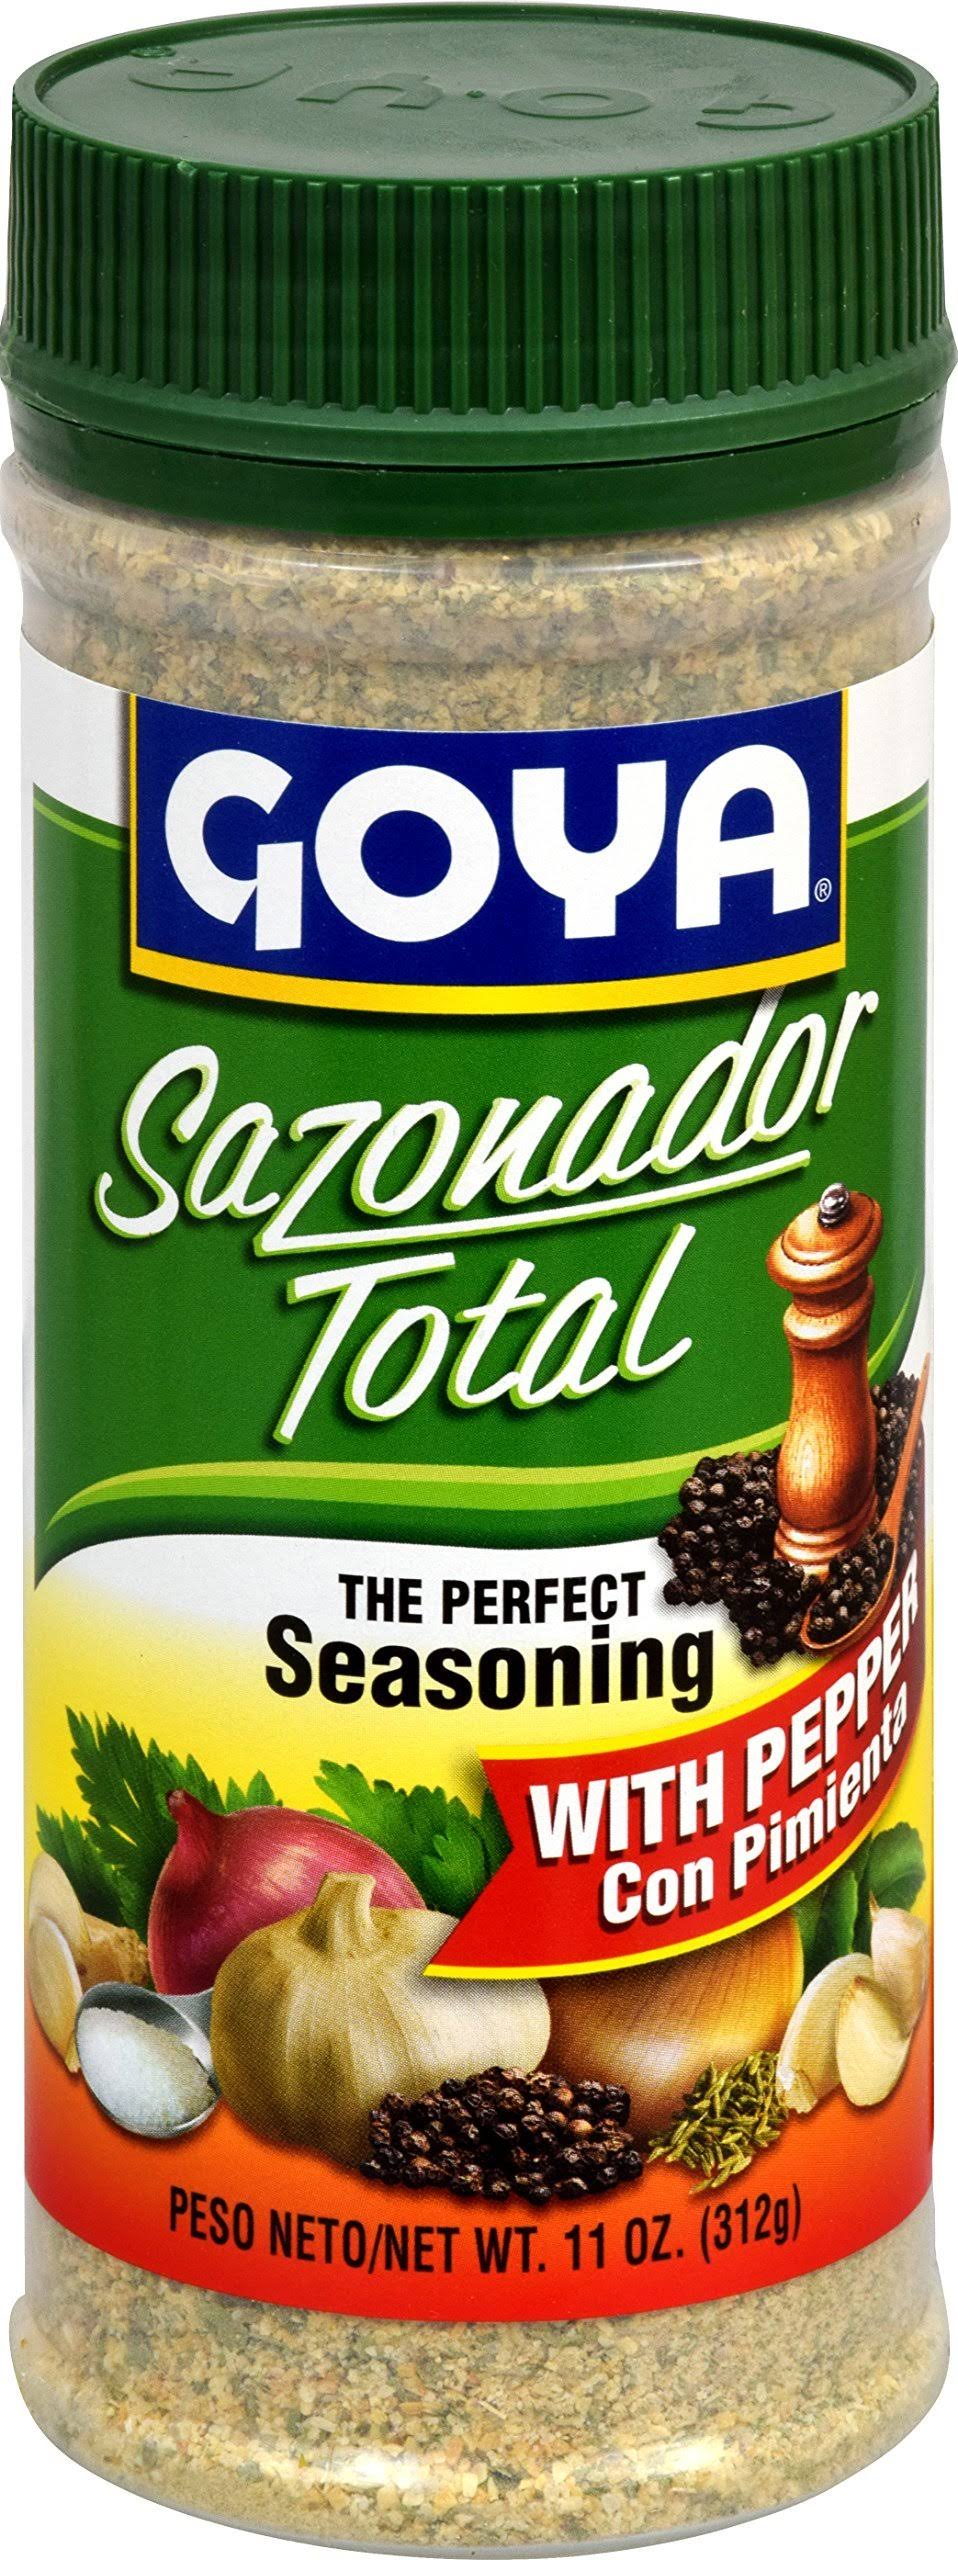 Goya Sazonador Total Seasoning - With Pepper, 11oz